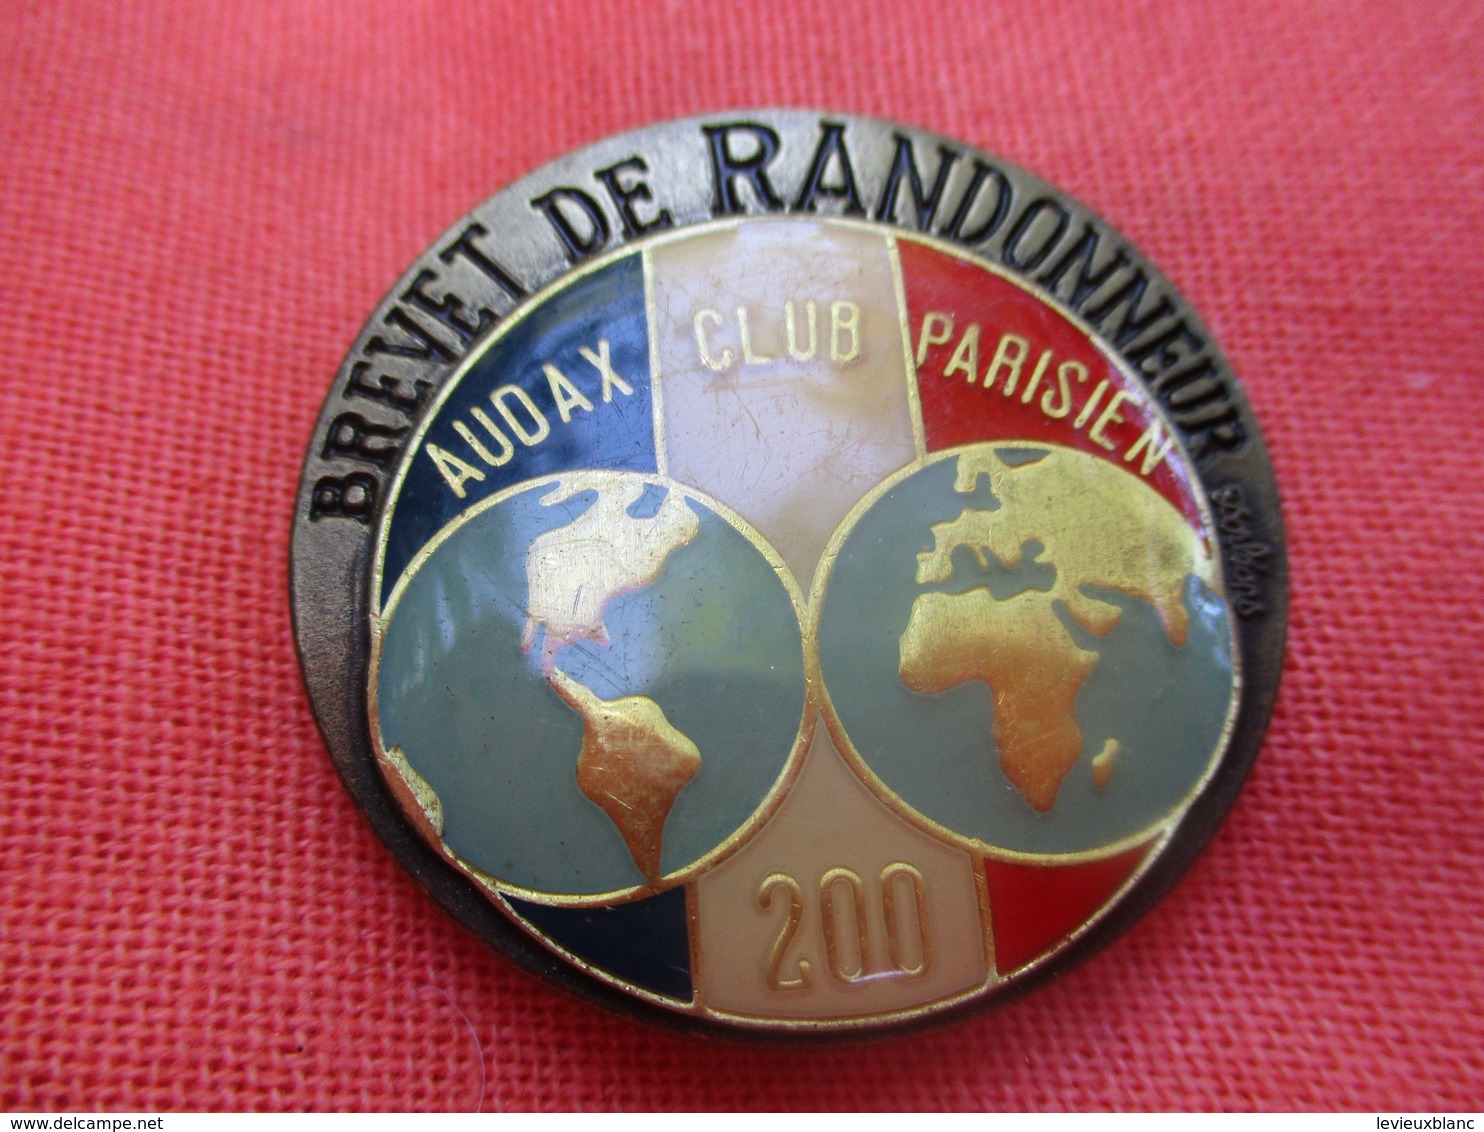 Insigne De Sport  à épingle/ Cyclisme/  Audax Club Parisien/Brevet De RANDONNEUR/200 Km/Beraudy/Vers 1980         SPO304 - Ciclismo